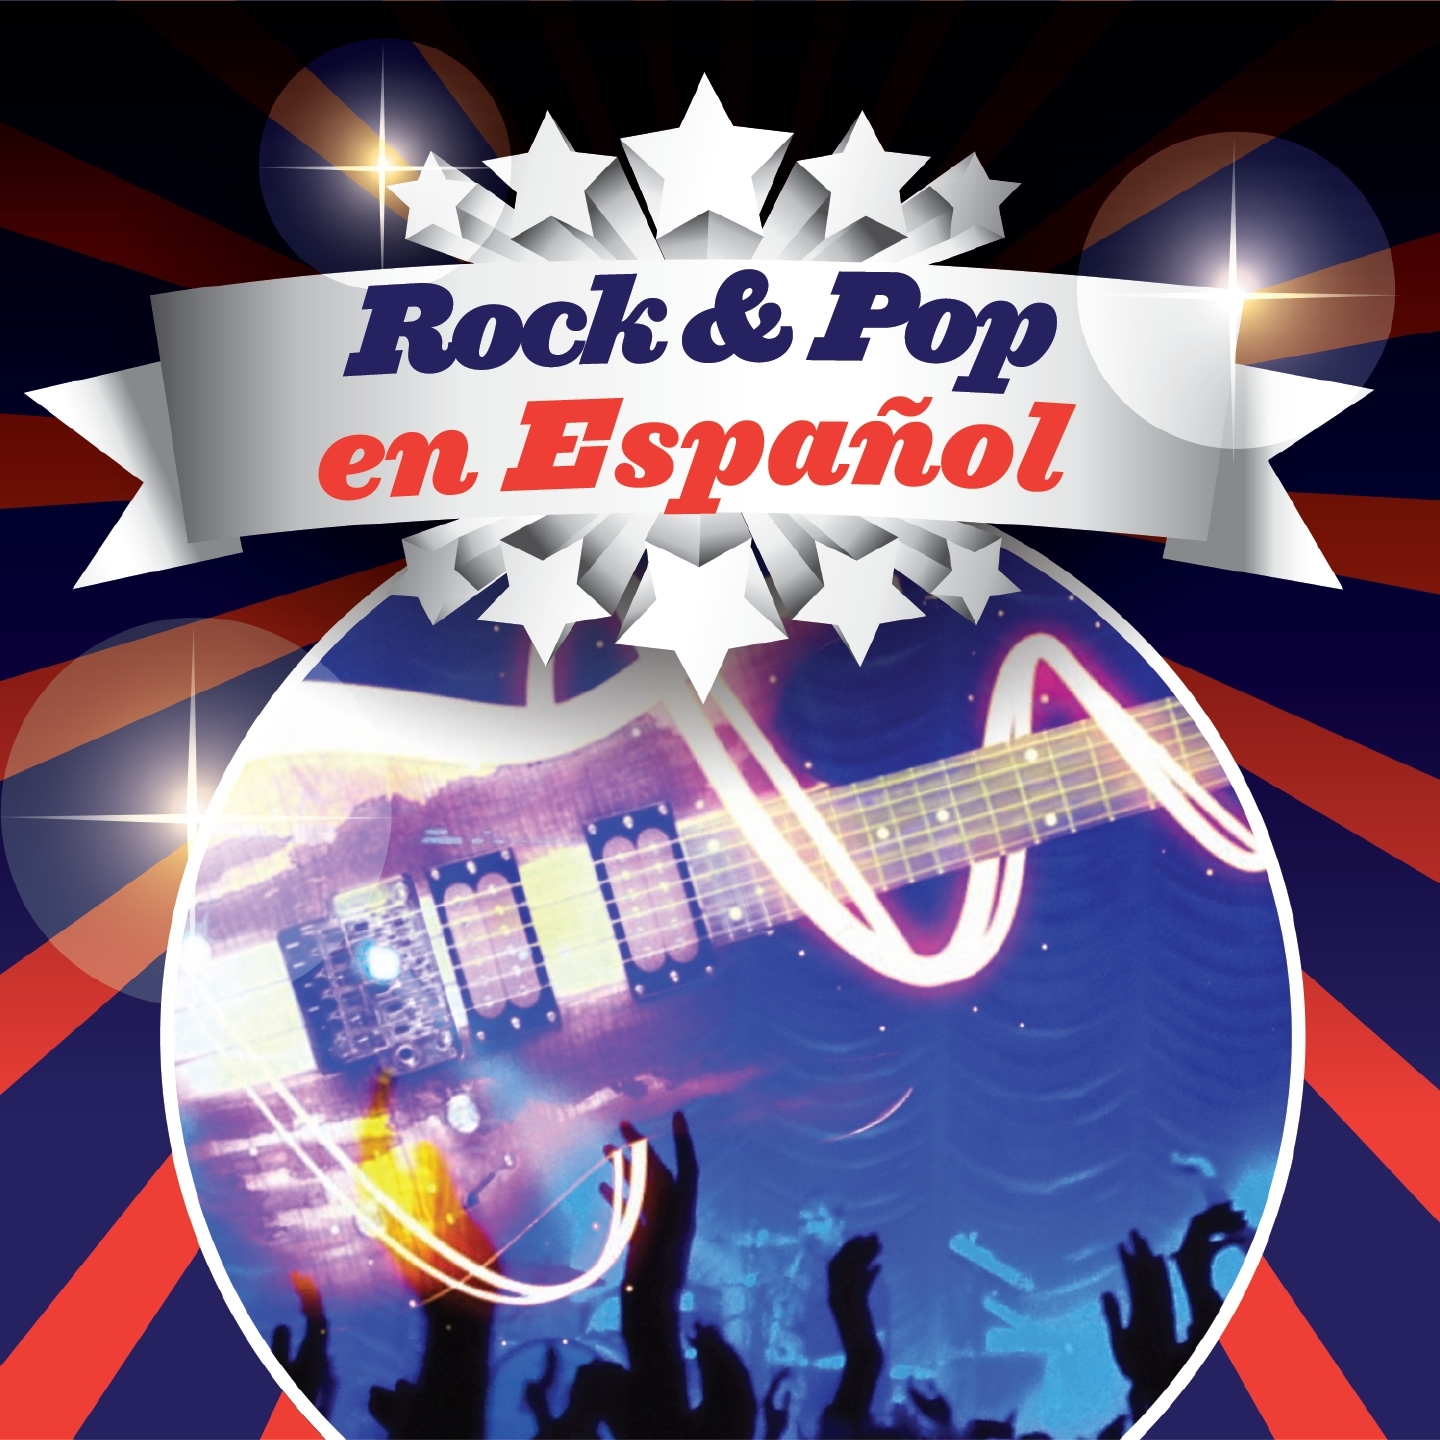 Rock & Pop en Español